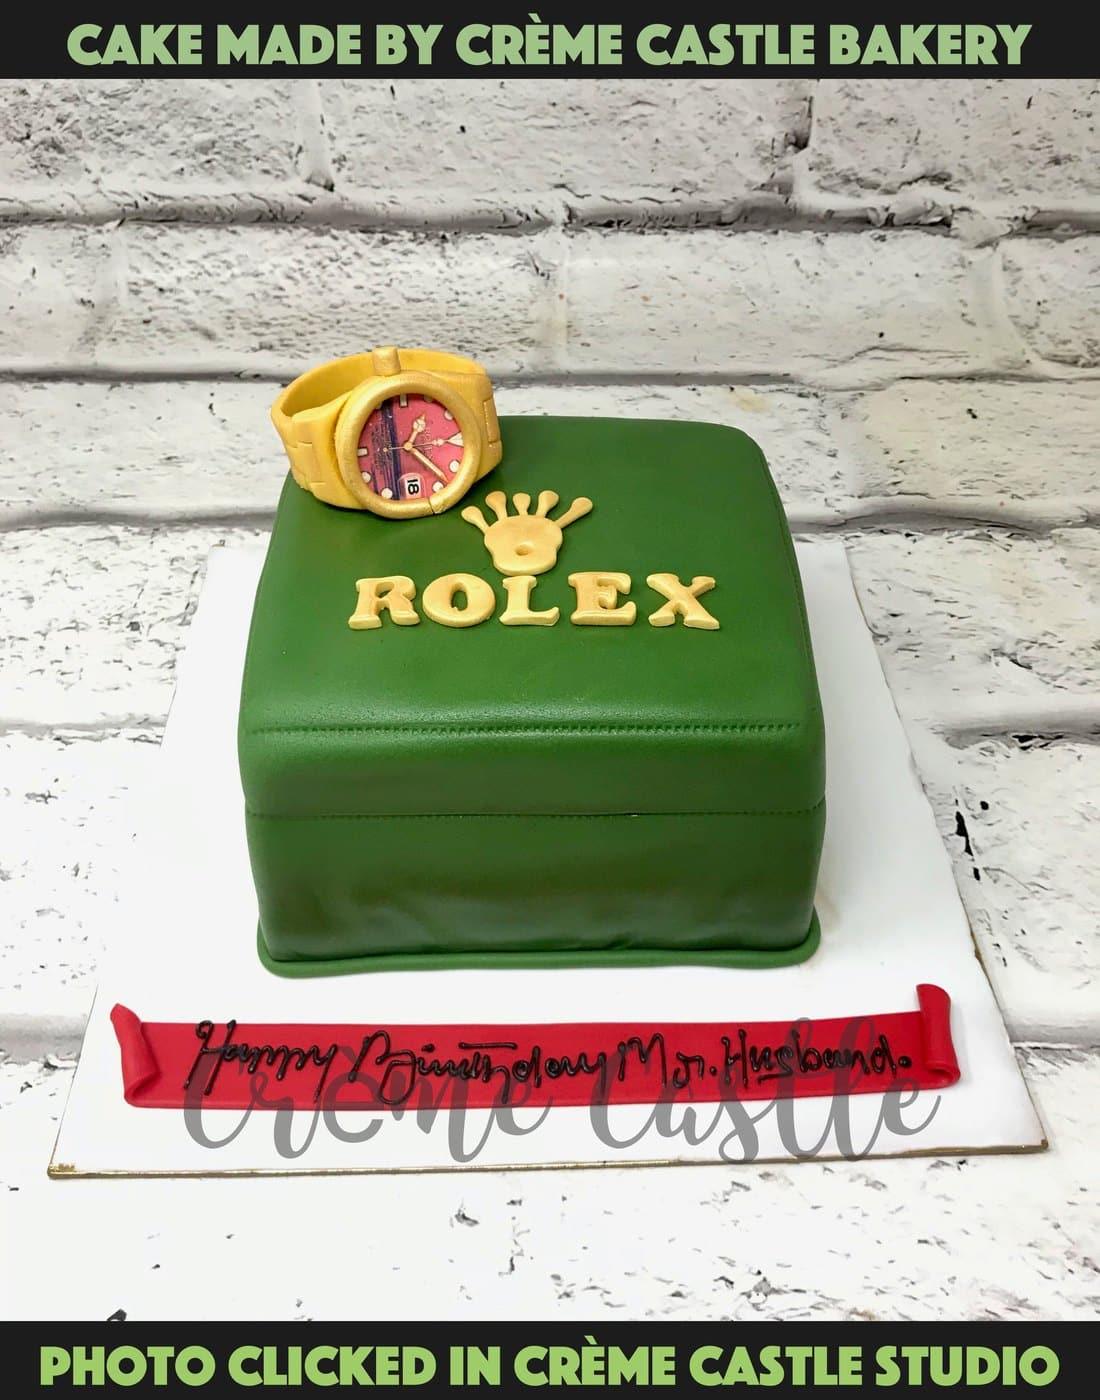 Rolex Watch Design Cake - Creme Castle